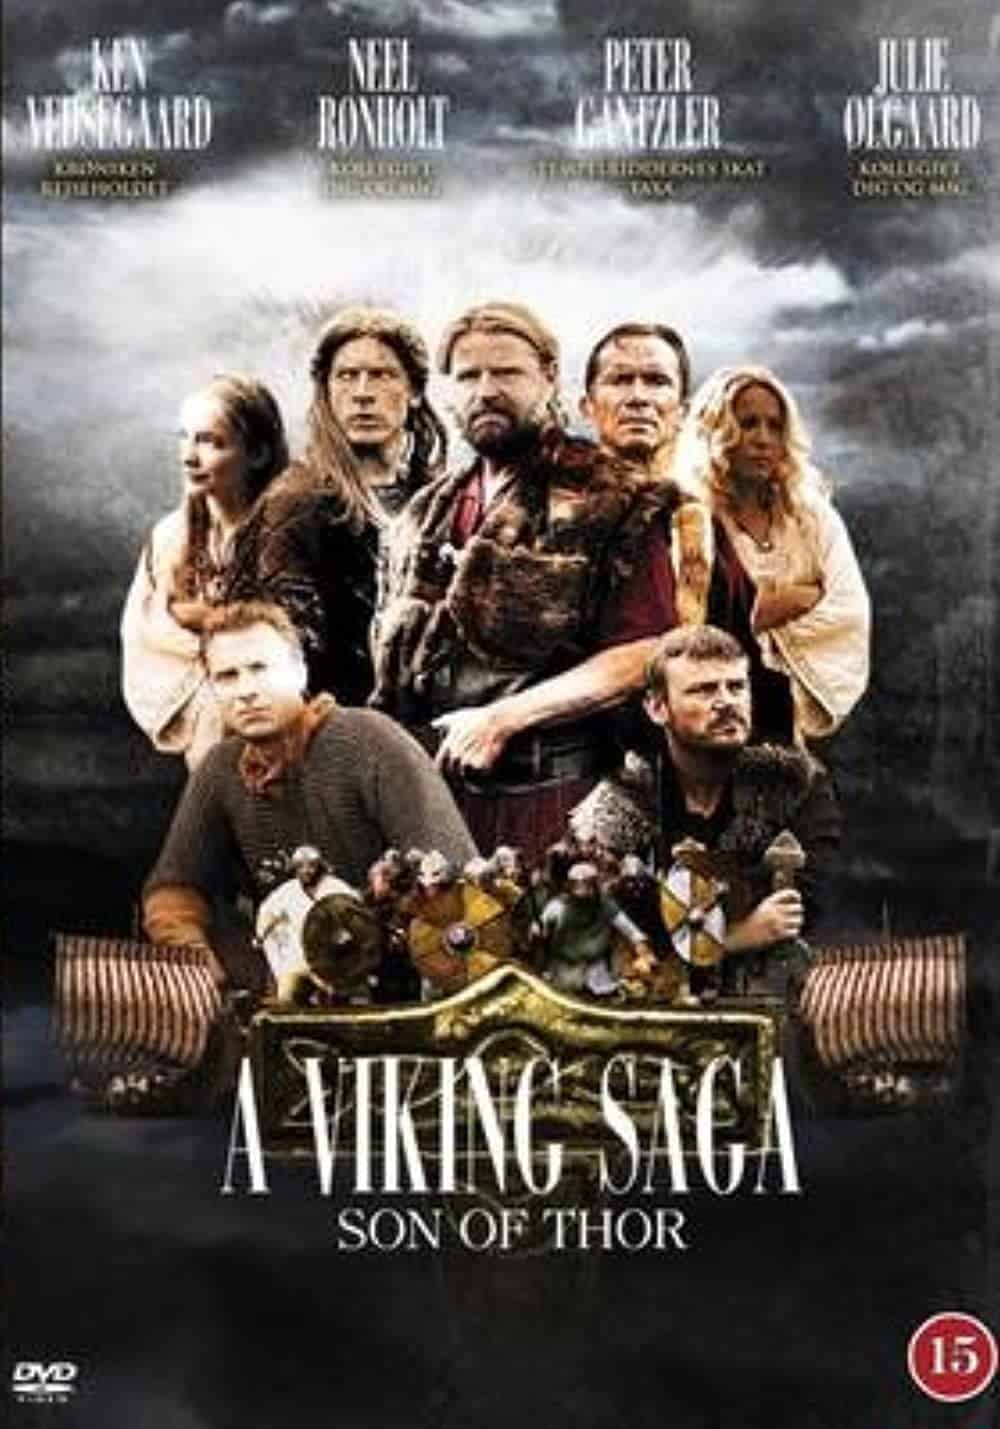 A Viking Saga Son of Thor (2008) 